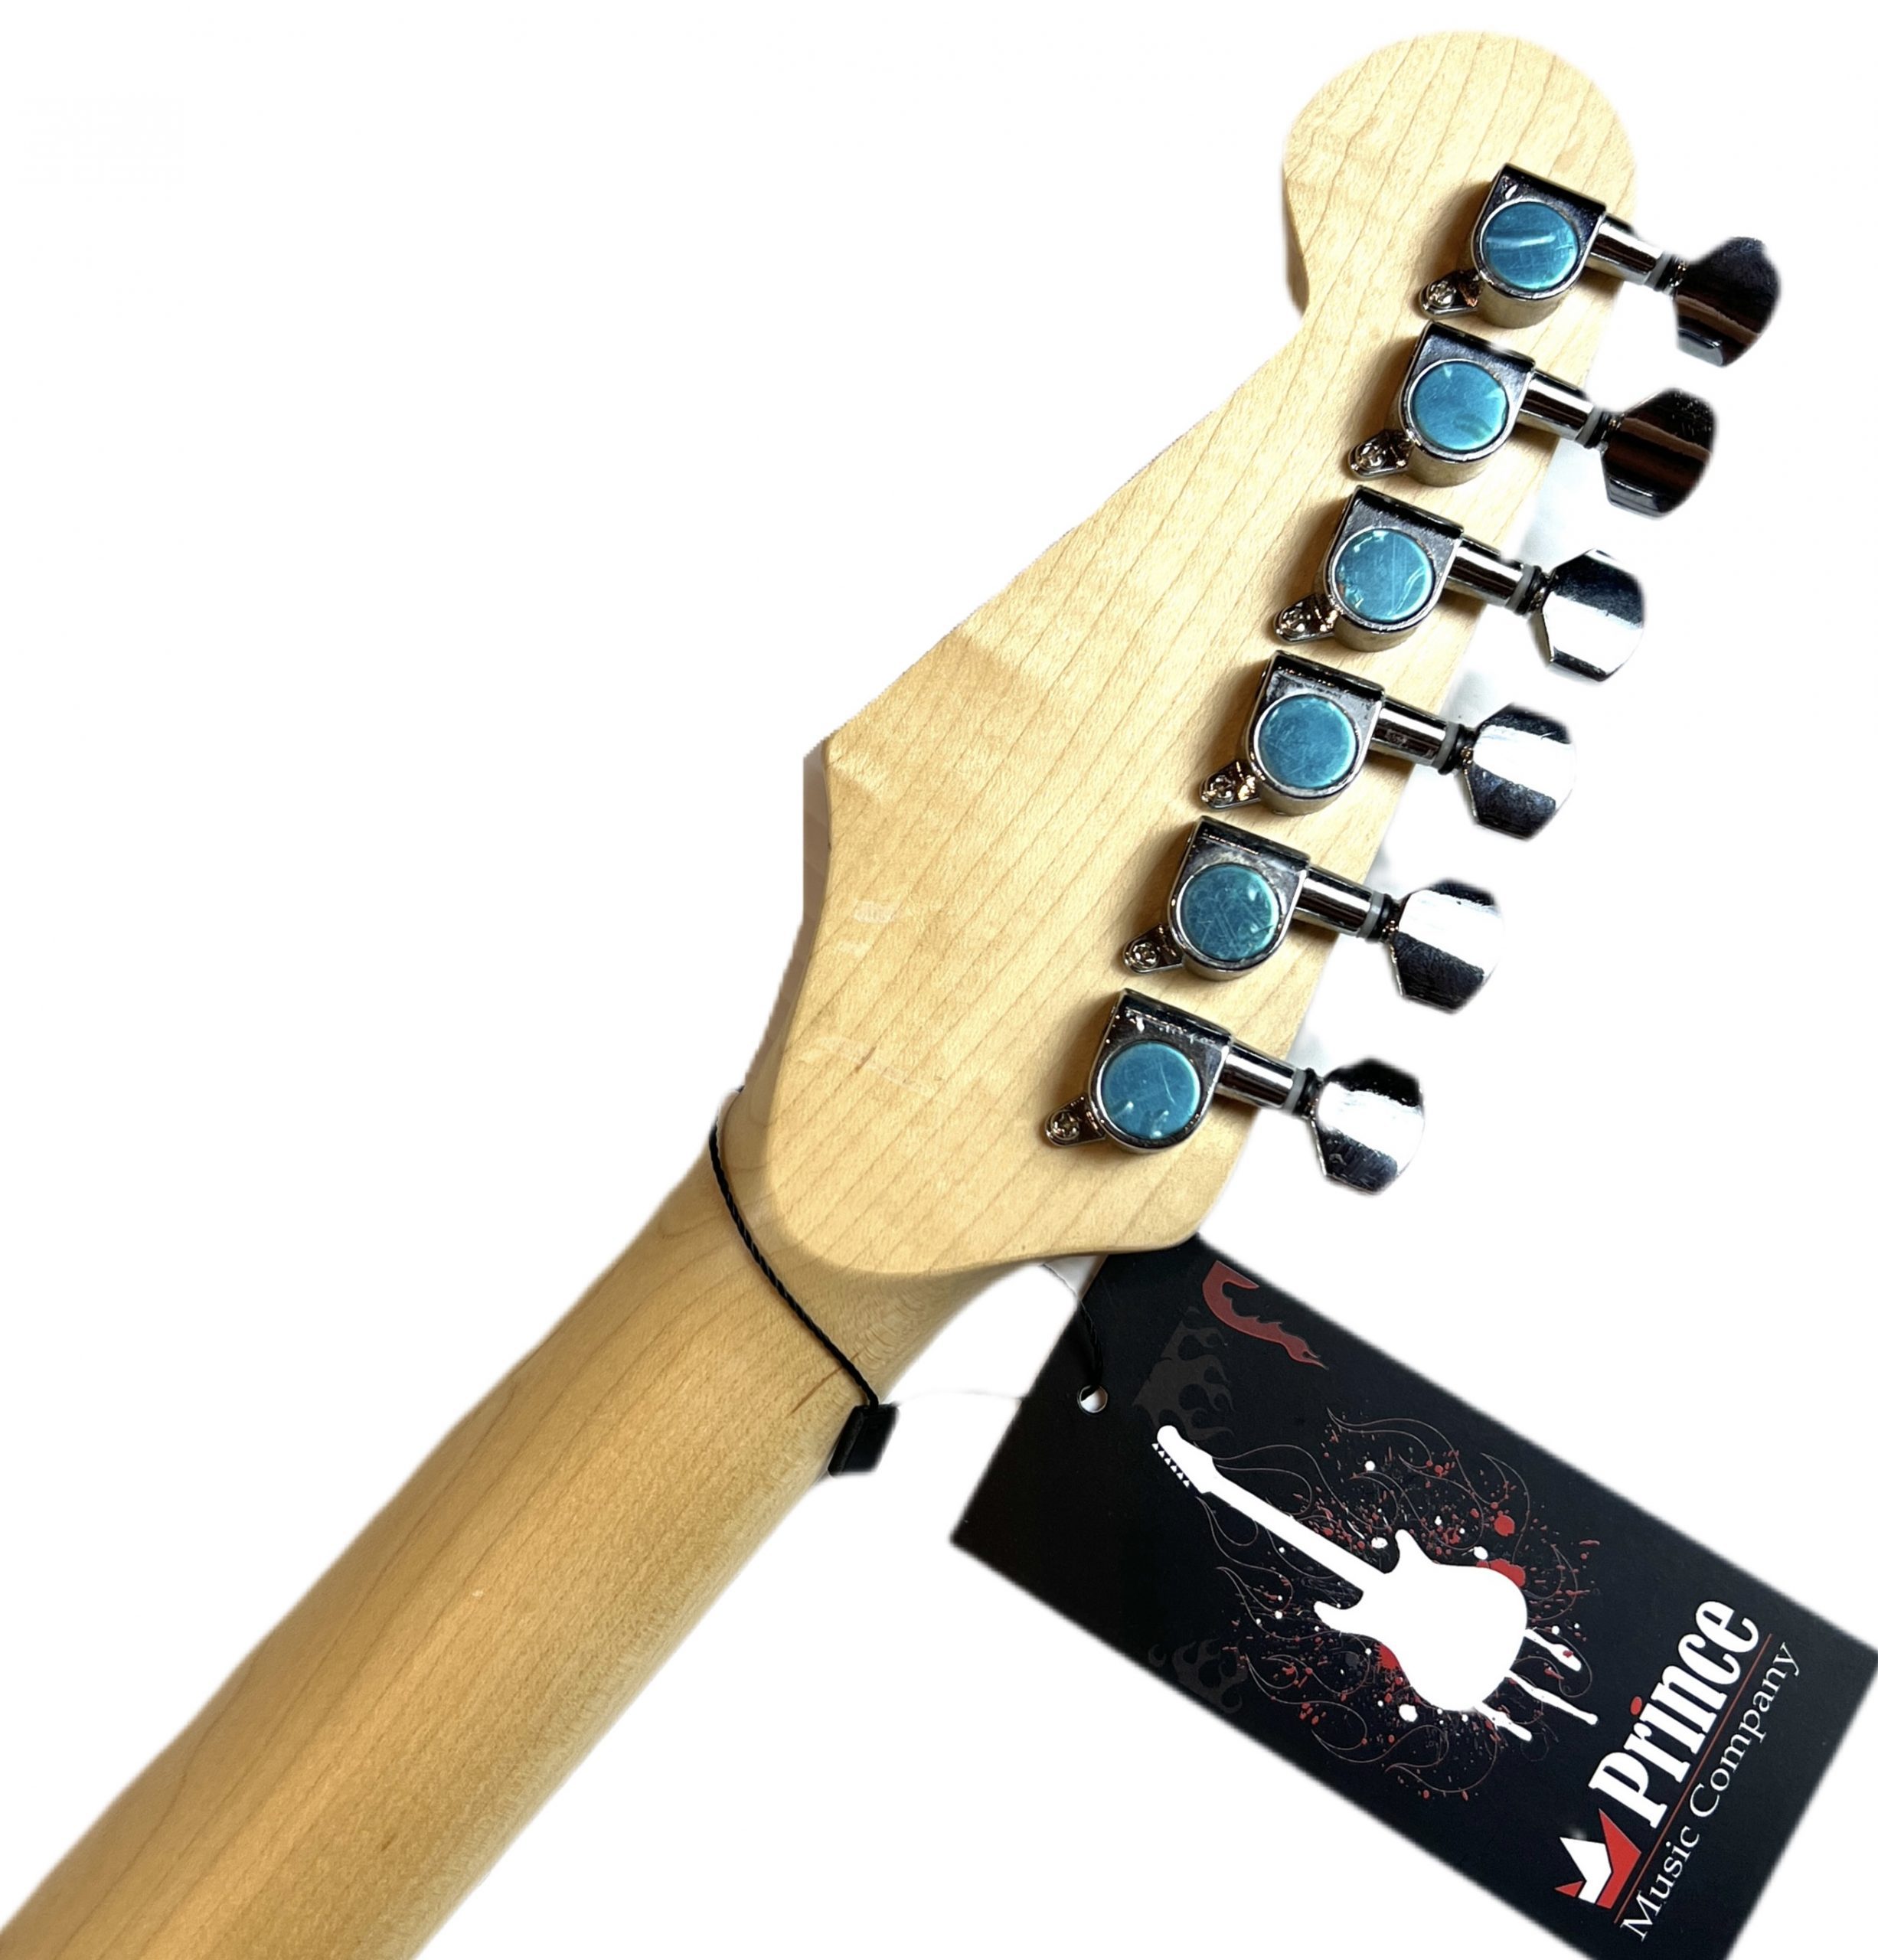 Neptune NJ Ed shred guitar gets final Transtint Aqua dye on body and  headstock 